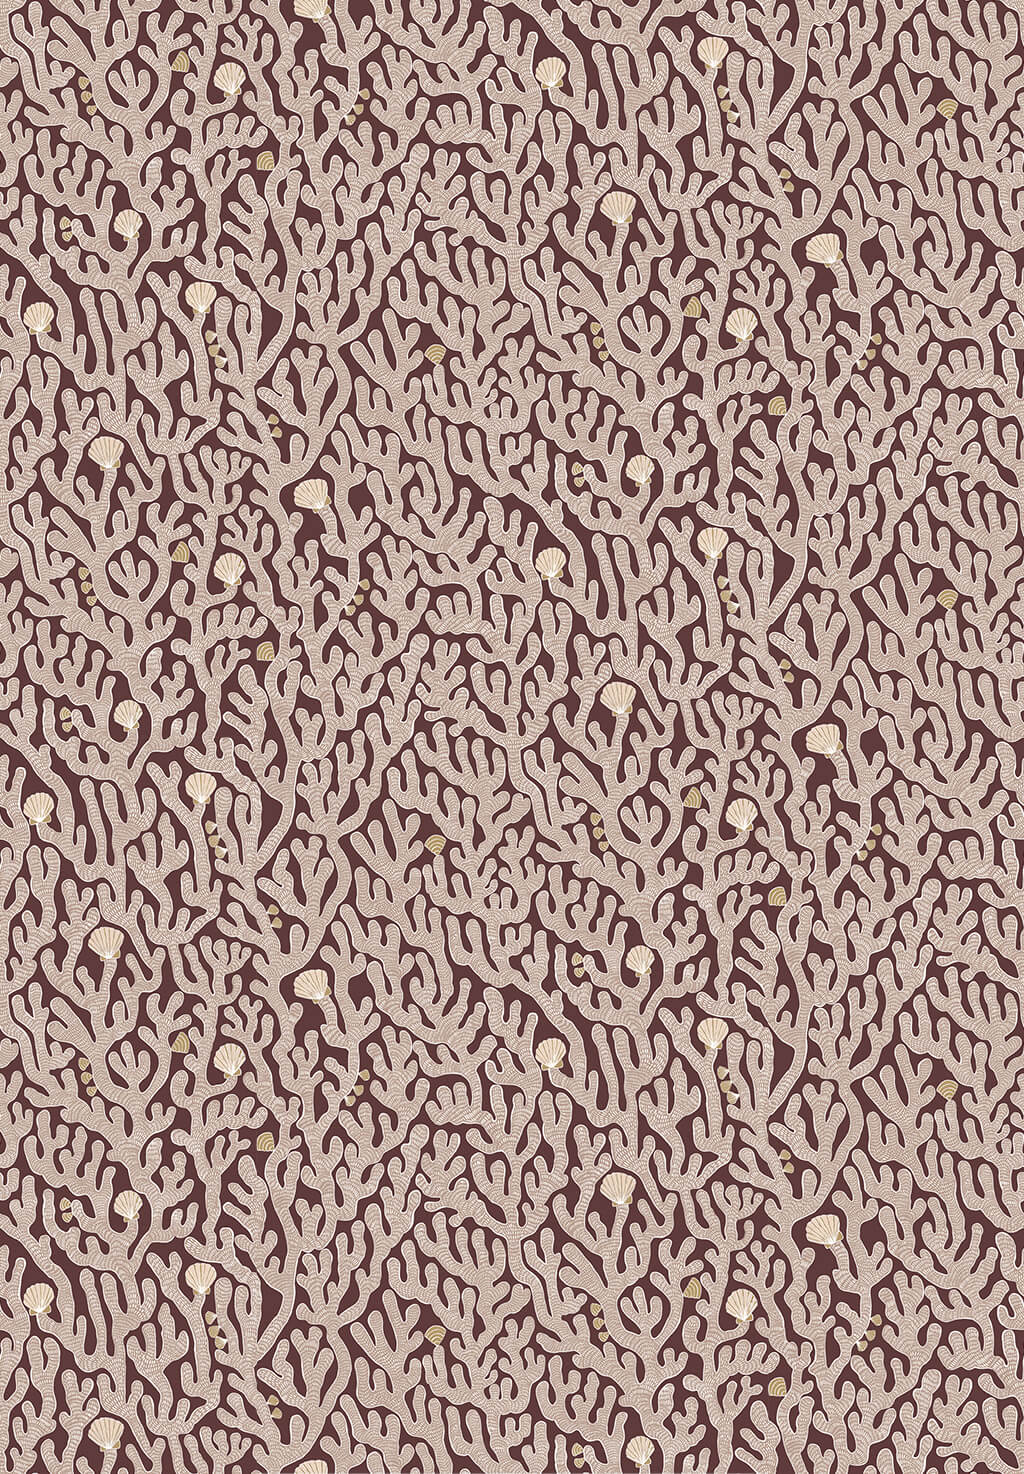 Josephine-munsey-wallpaper-coral-print-illustration-spicer-brown